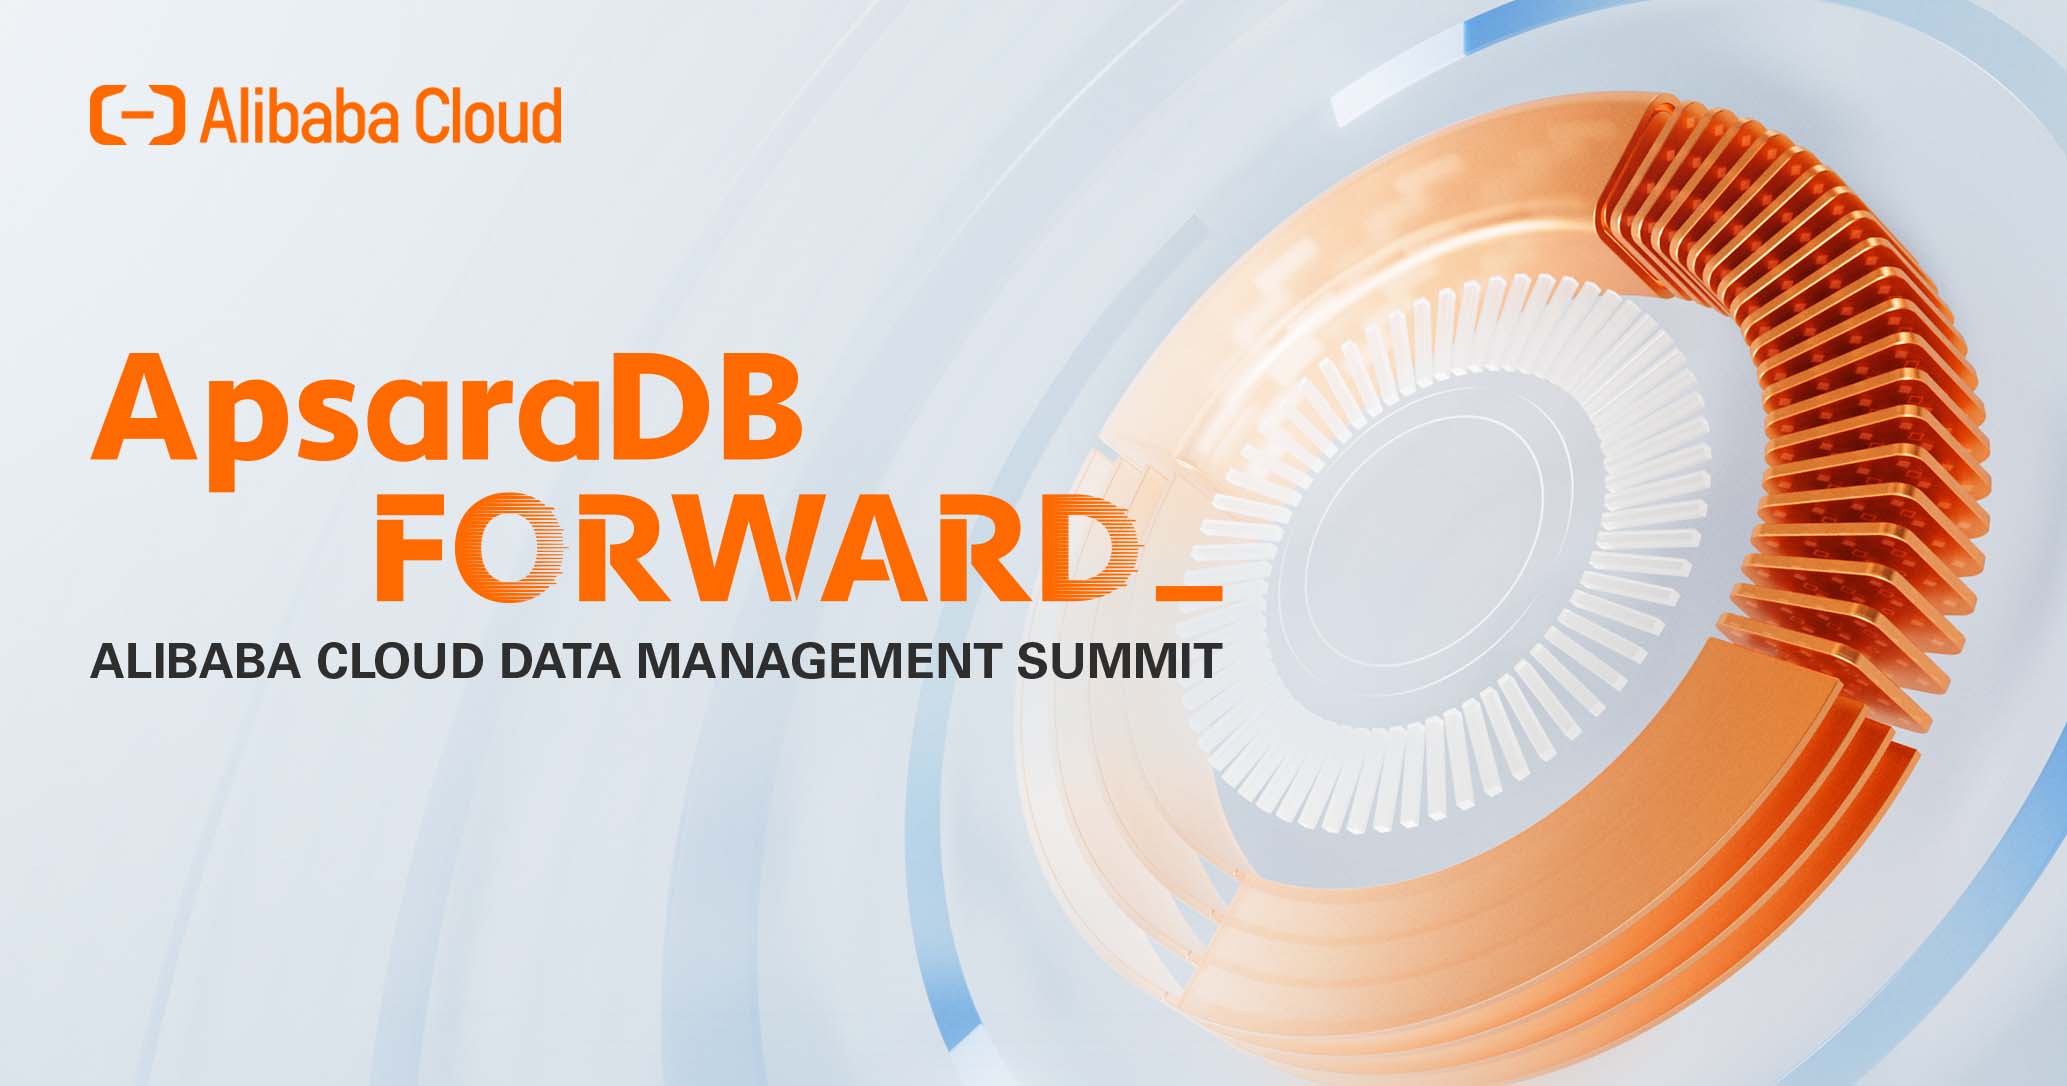 ApsaraDB Forward - Alibaba Cloud Data Management Summit